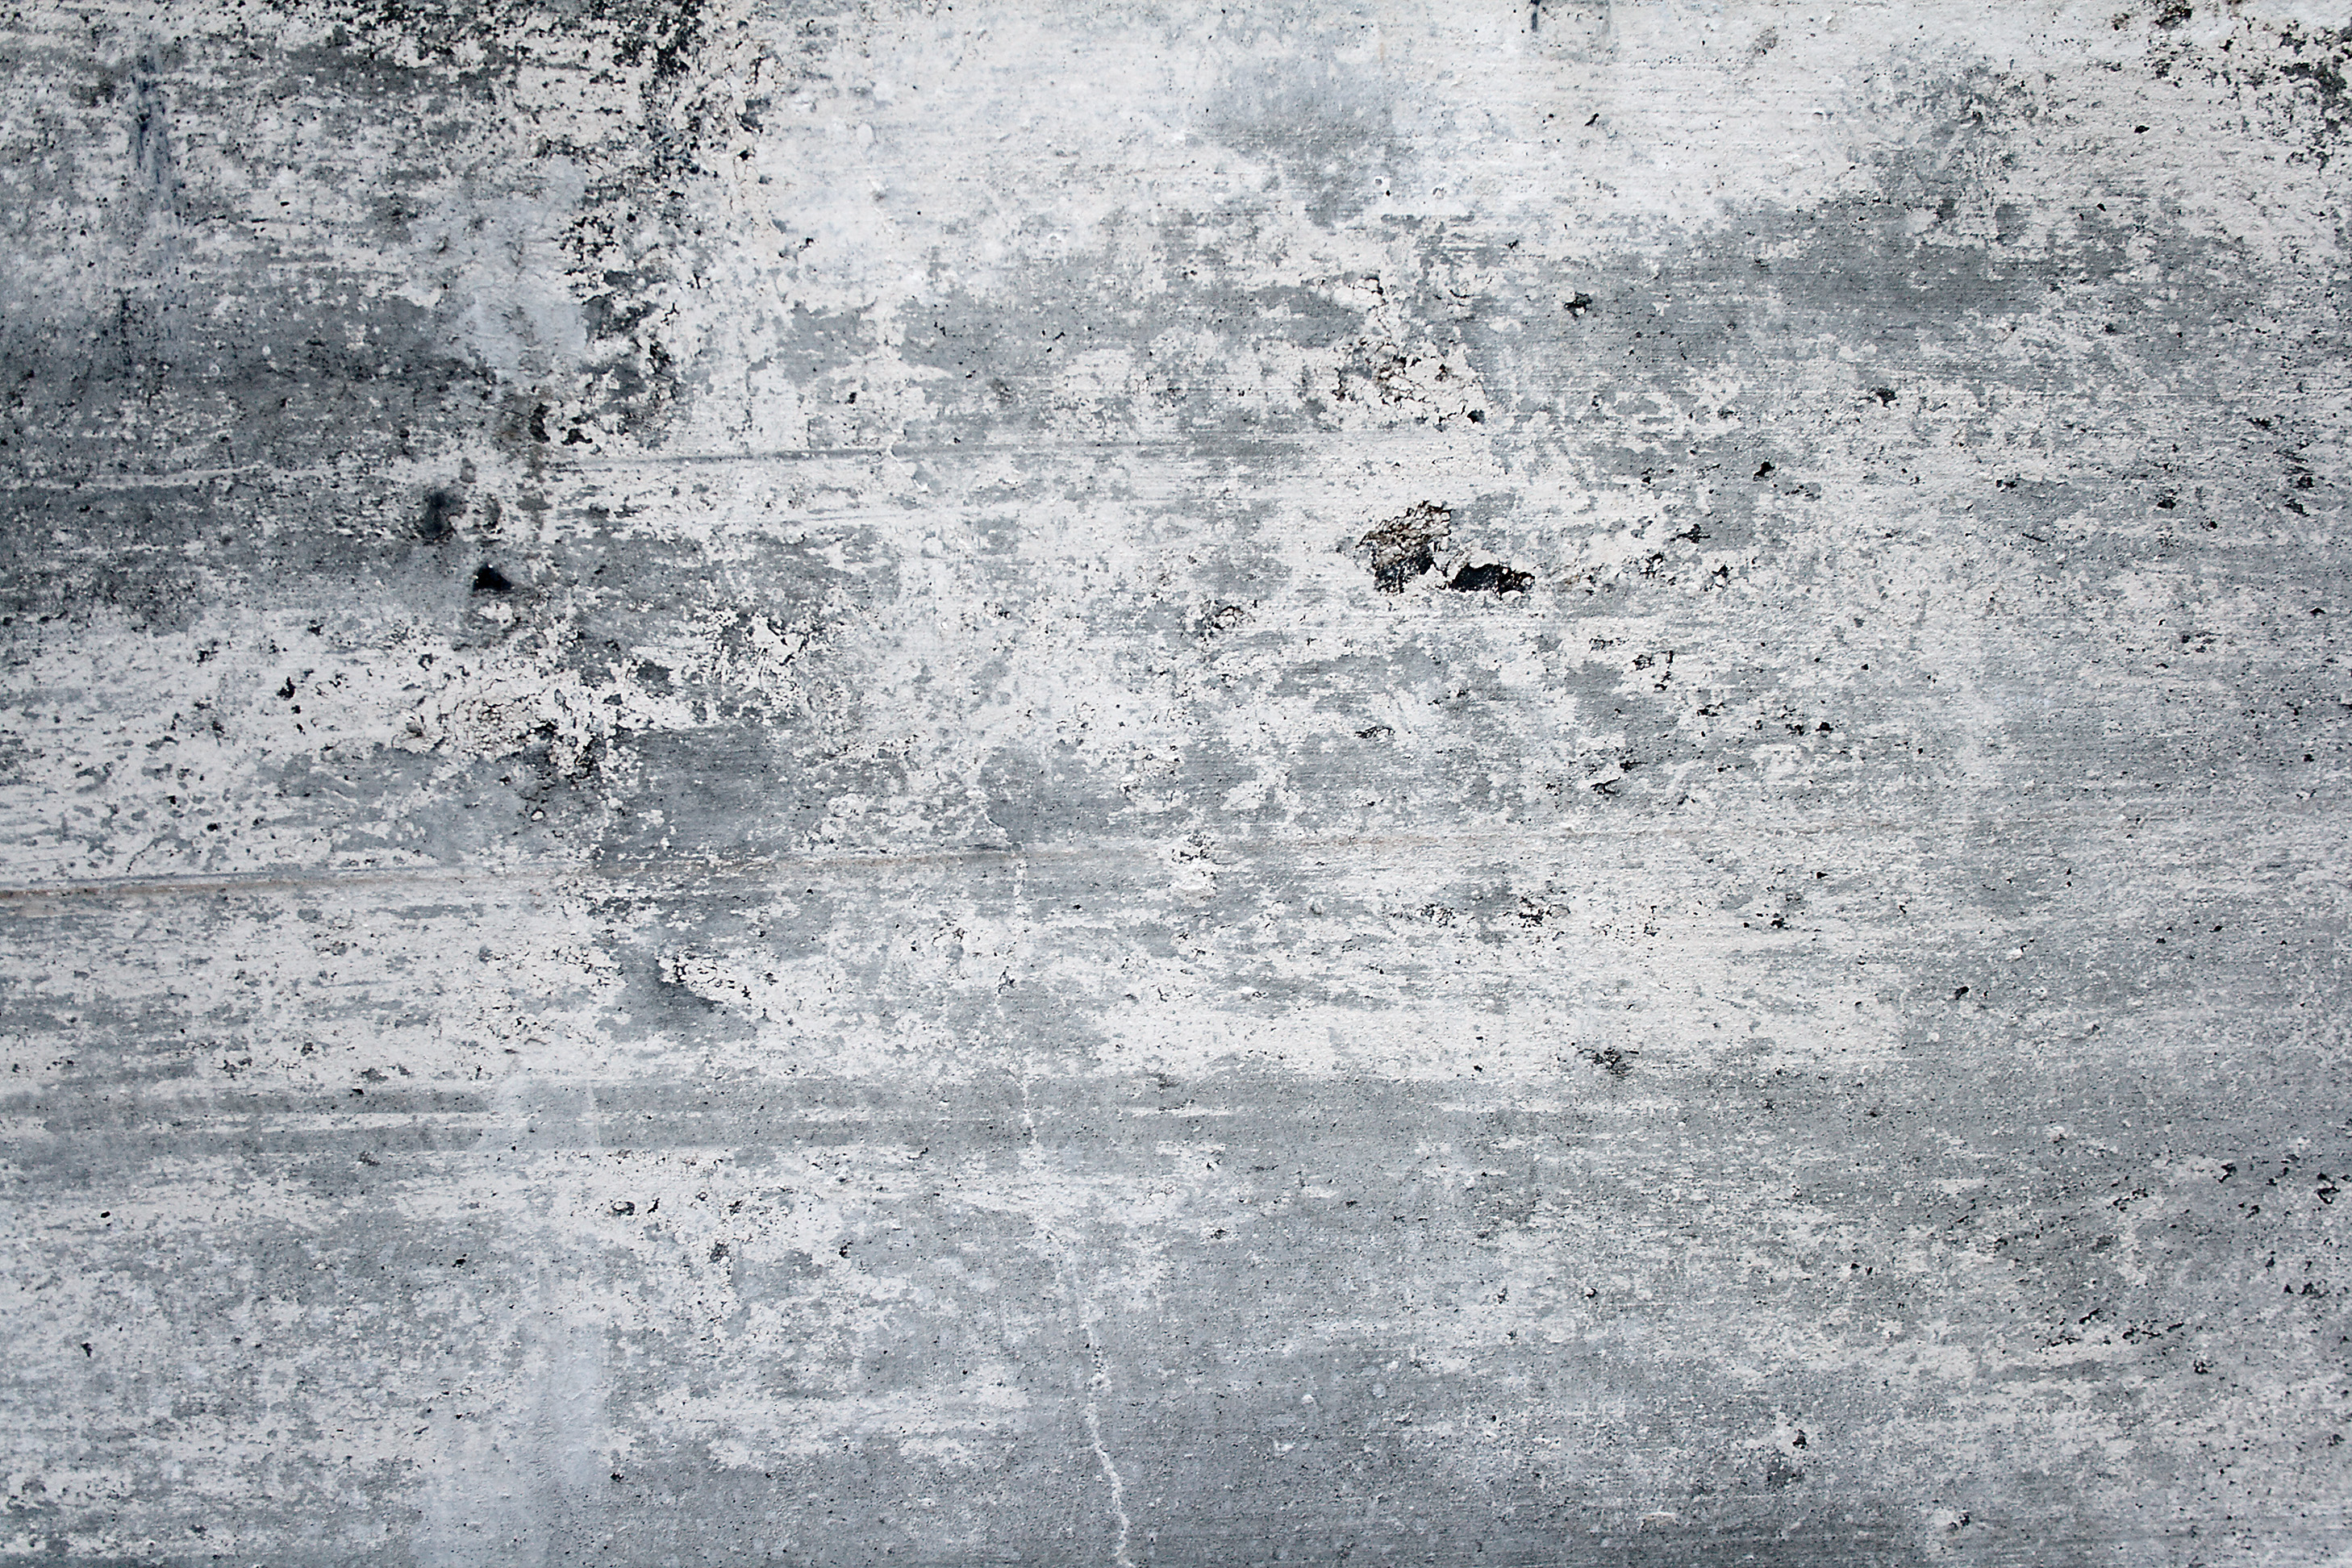 Gritty concrete texture photo